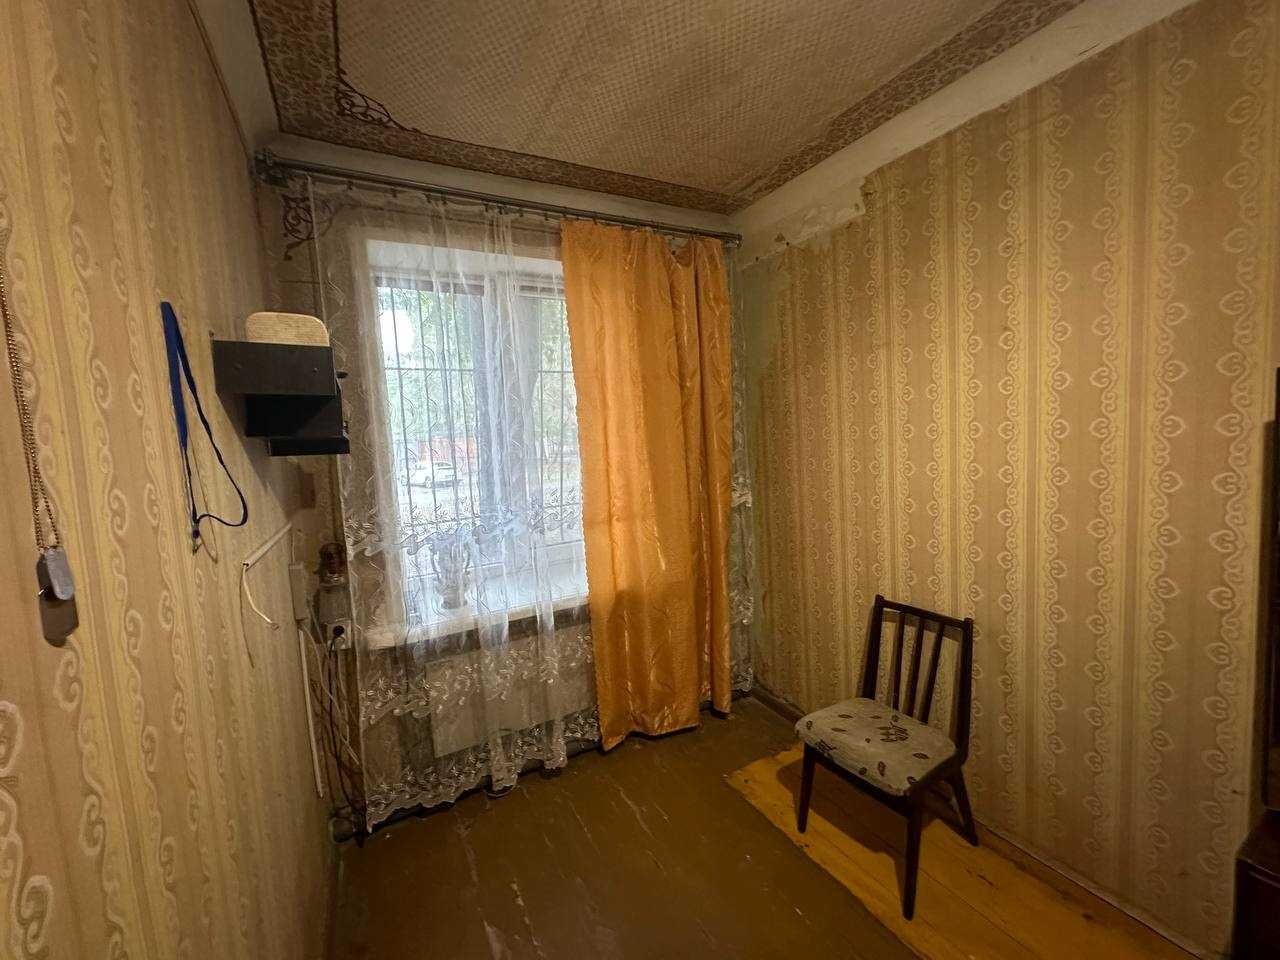 Продам 2-х квартиру на улице Строителей, 31 (р-он Титова)